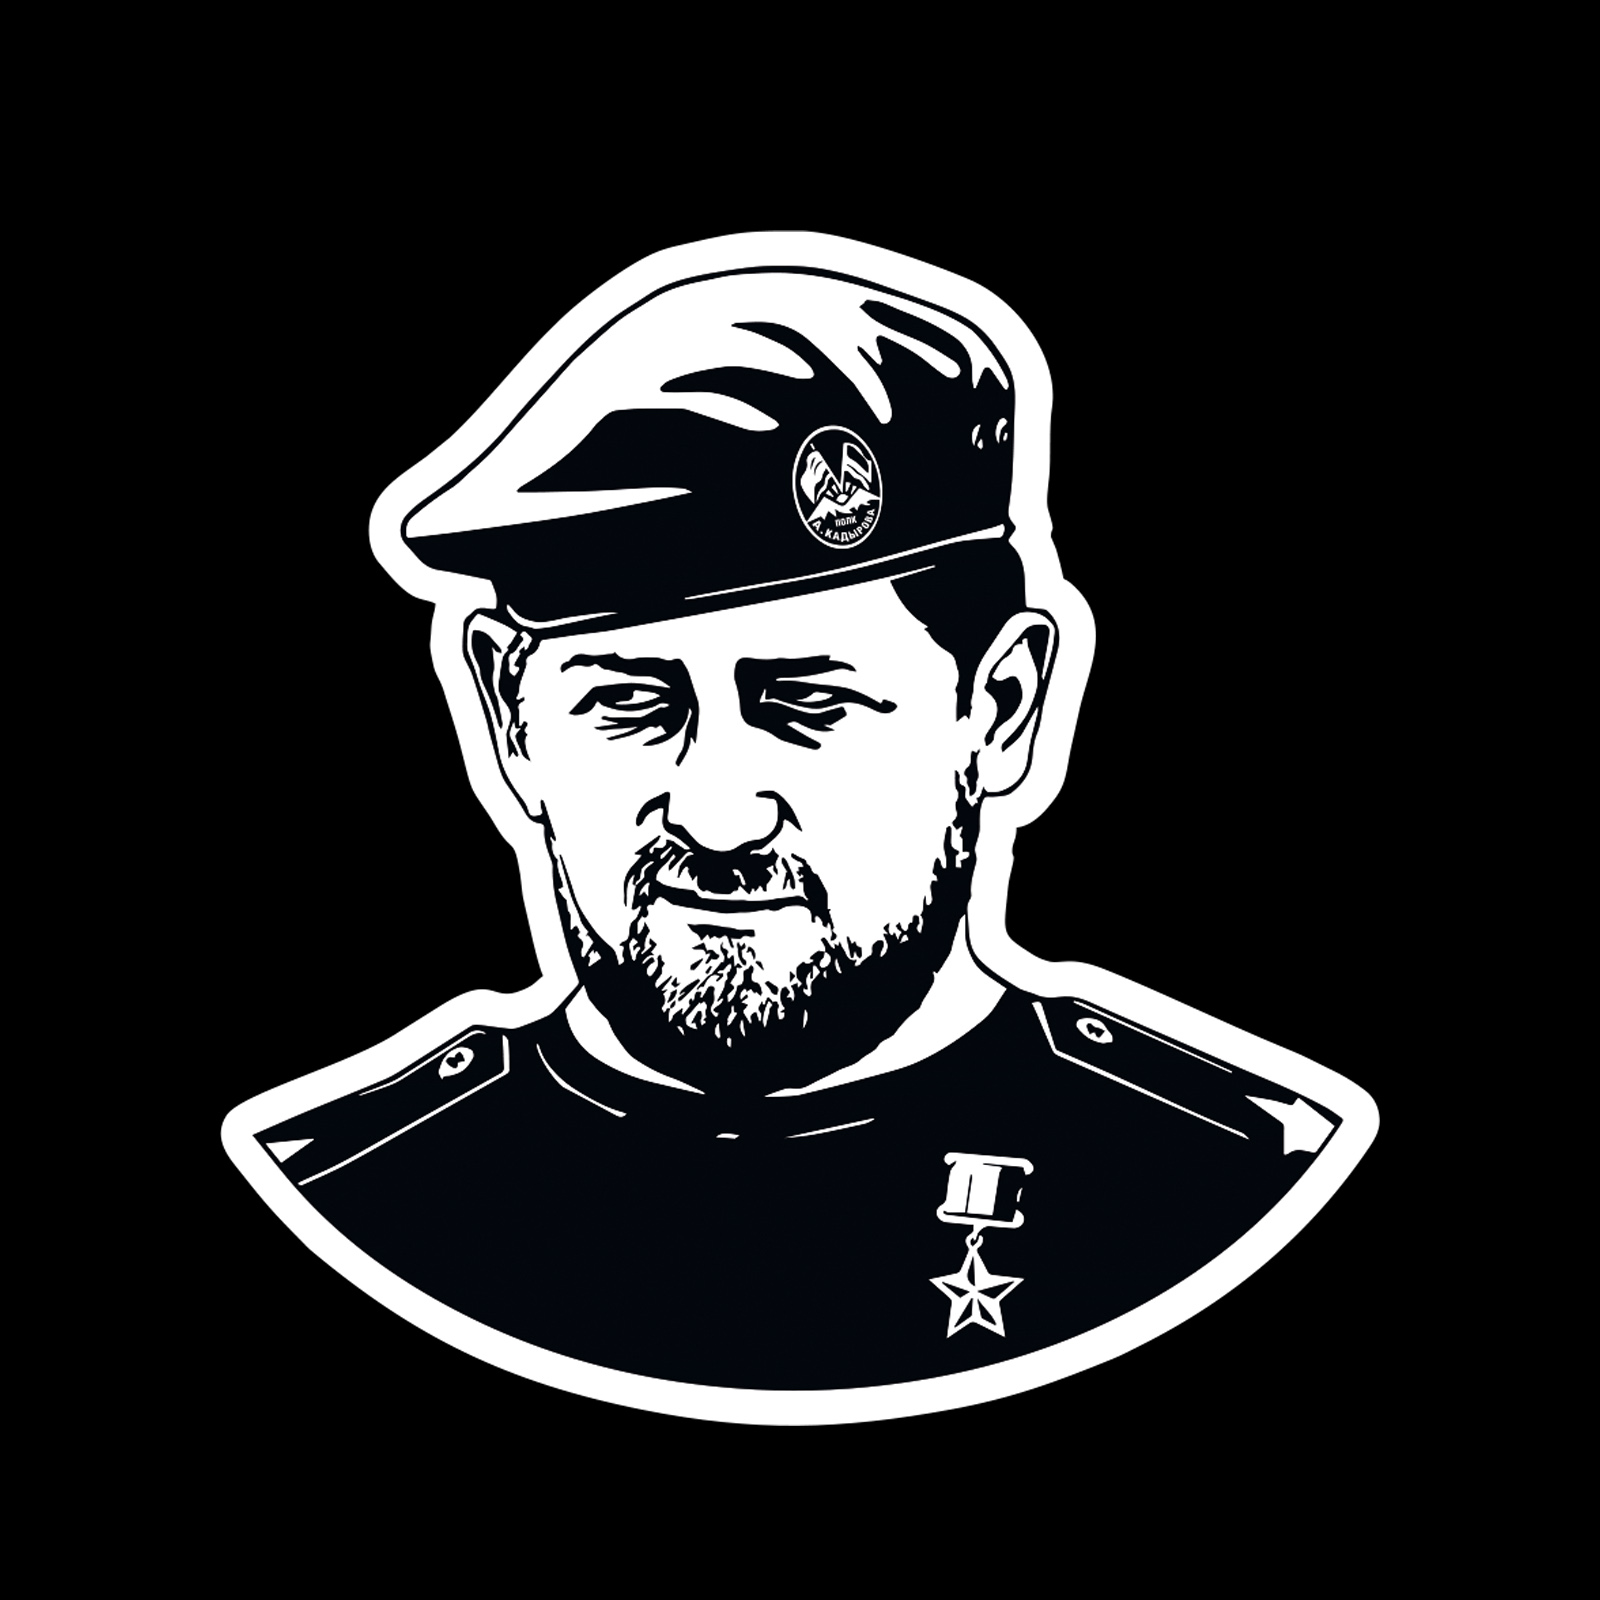 Недорогие милитари футболки с фото Кадырова